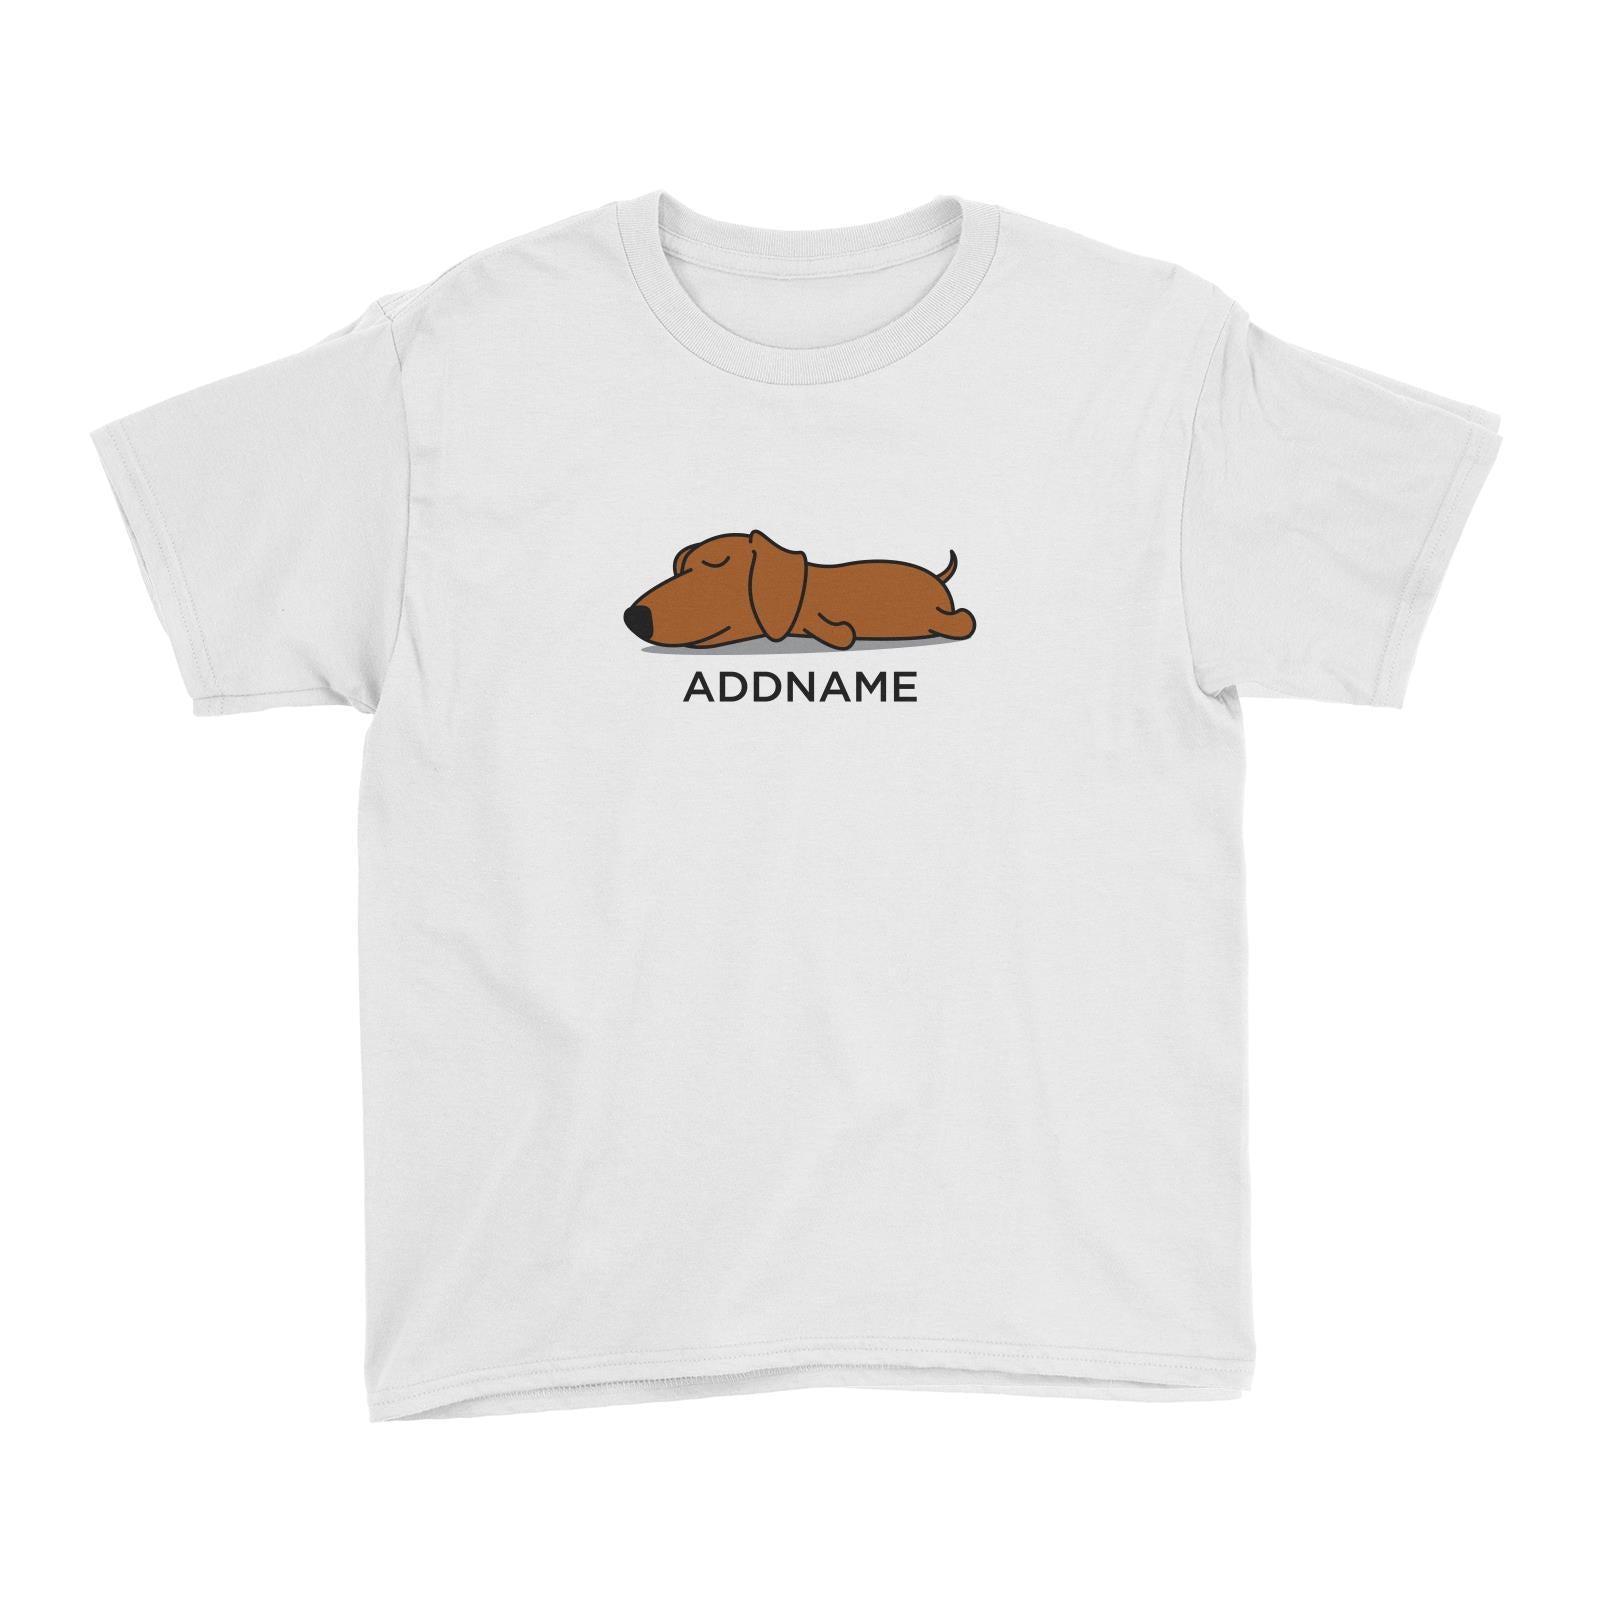 Lazy Daschund Dog Addname Kid's T-Shirt